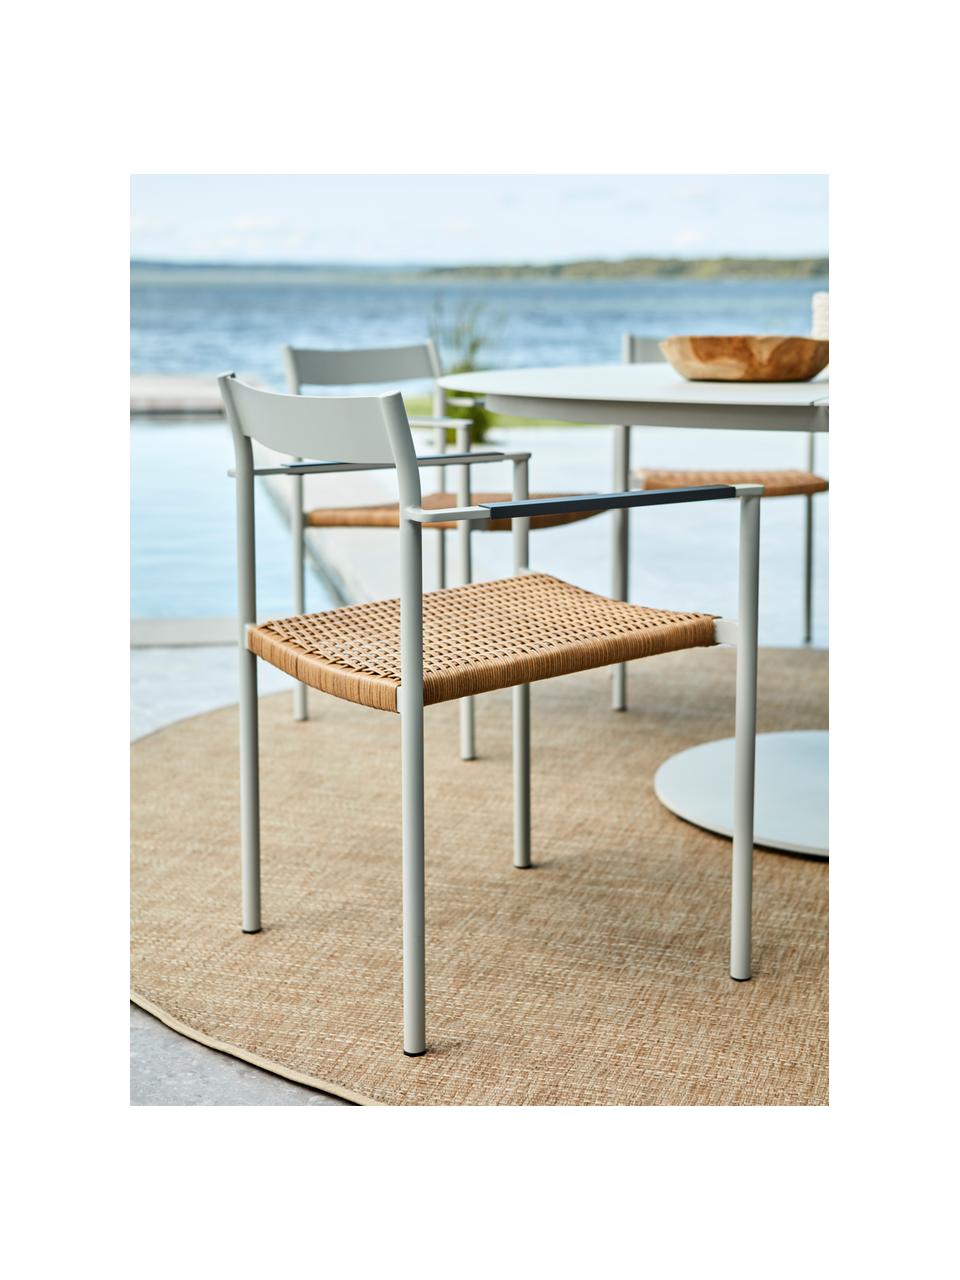 Gartenstühle DK, 2 Stück, Gestell: Aluminium, beschichtet, Sitzfläche: Polyrattan, Salbeigrün, Beige, B 55 x T 54 cm